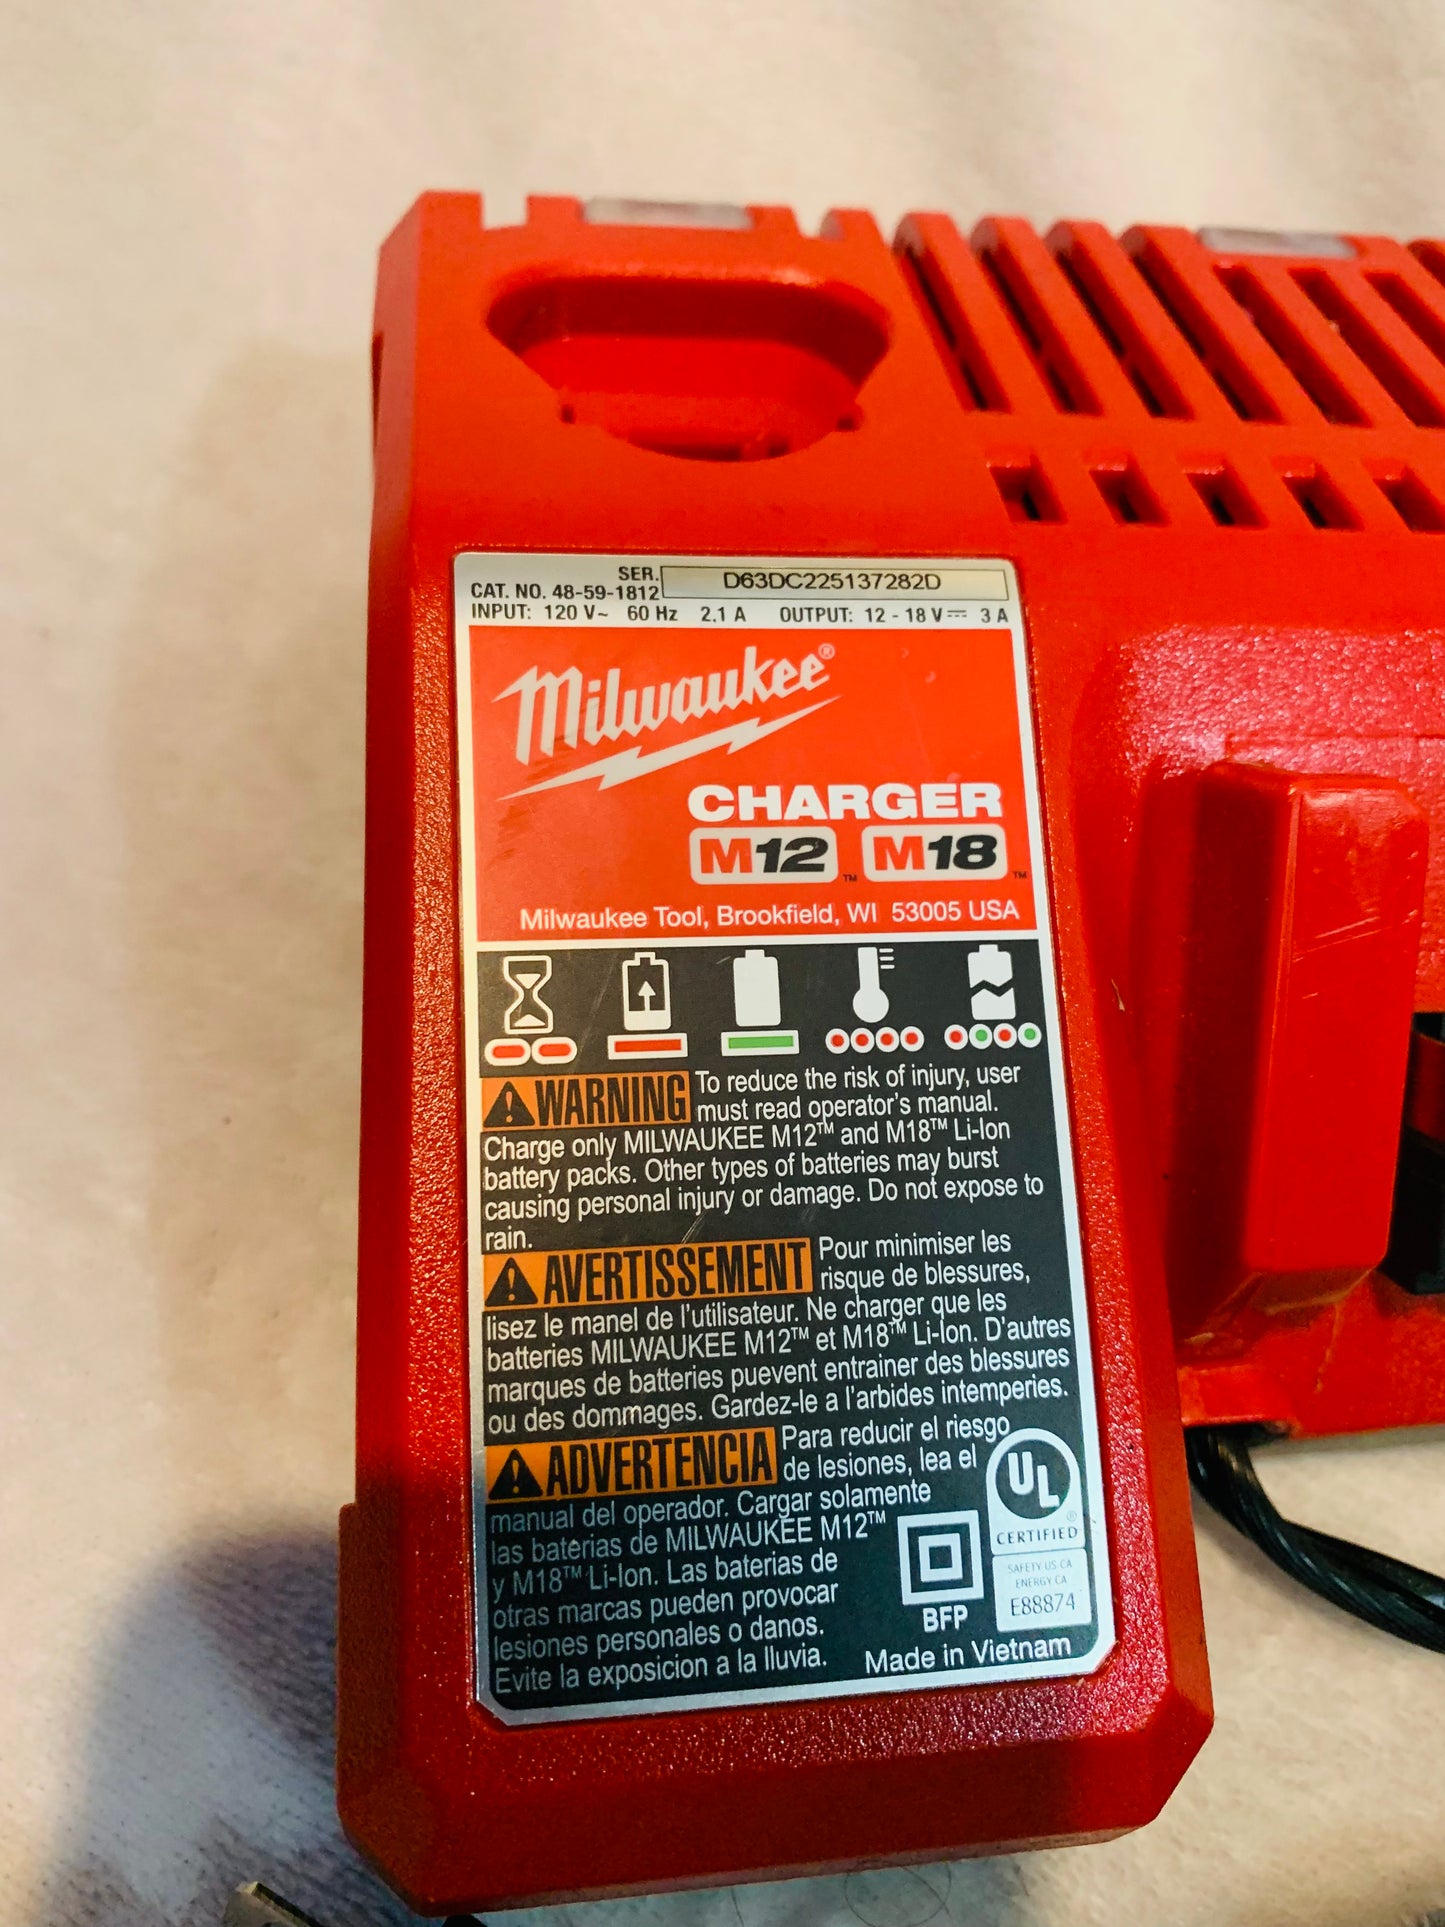 M12 and M18 12V/18V Multi-Voltage Battery Charger